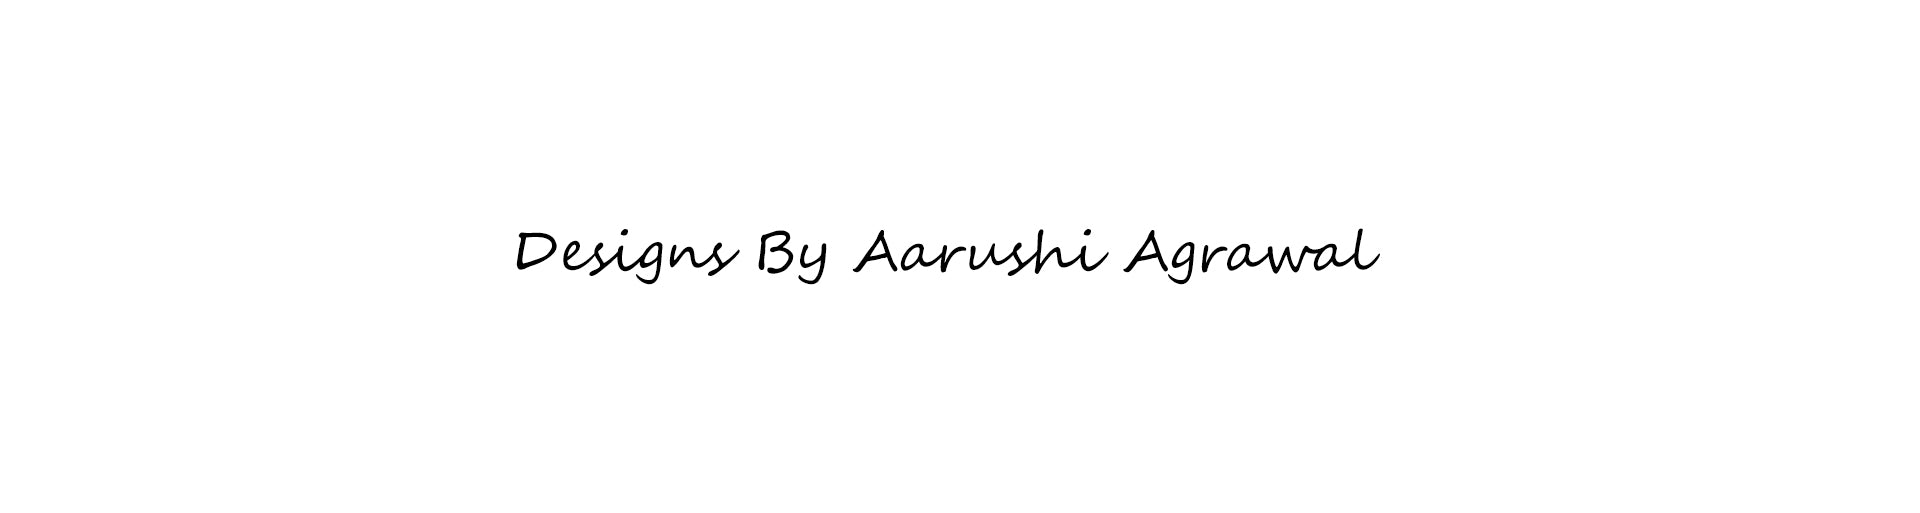 Aarushi Agrawal